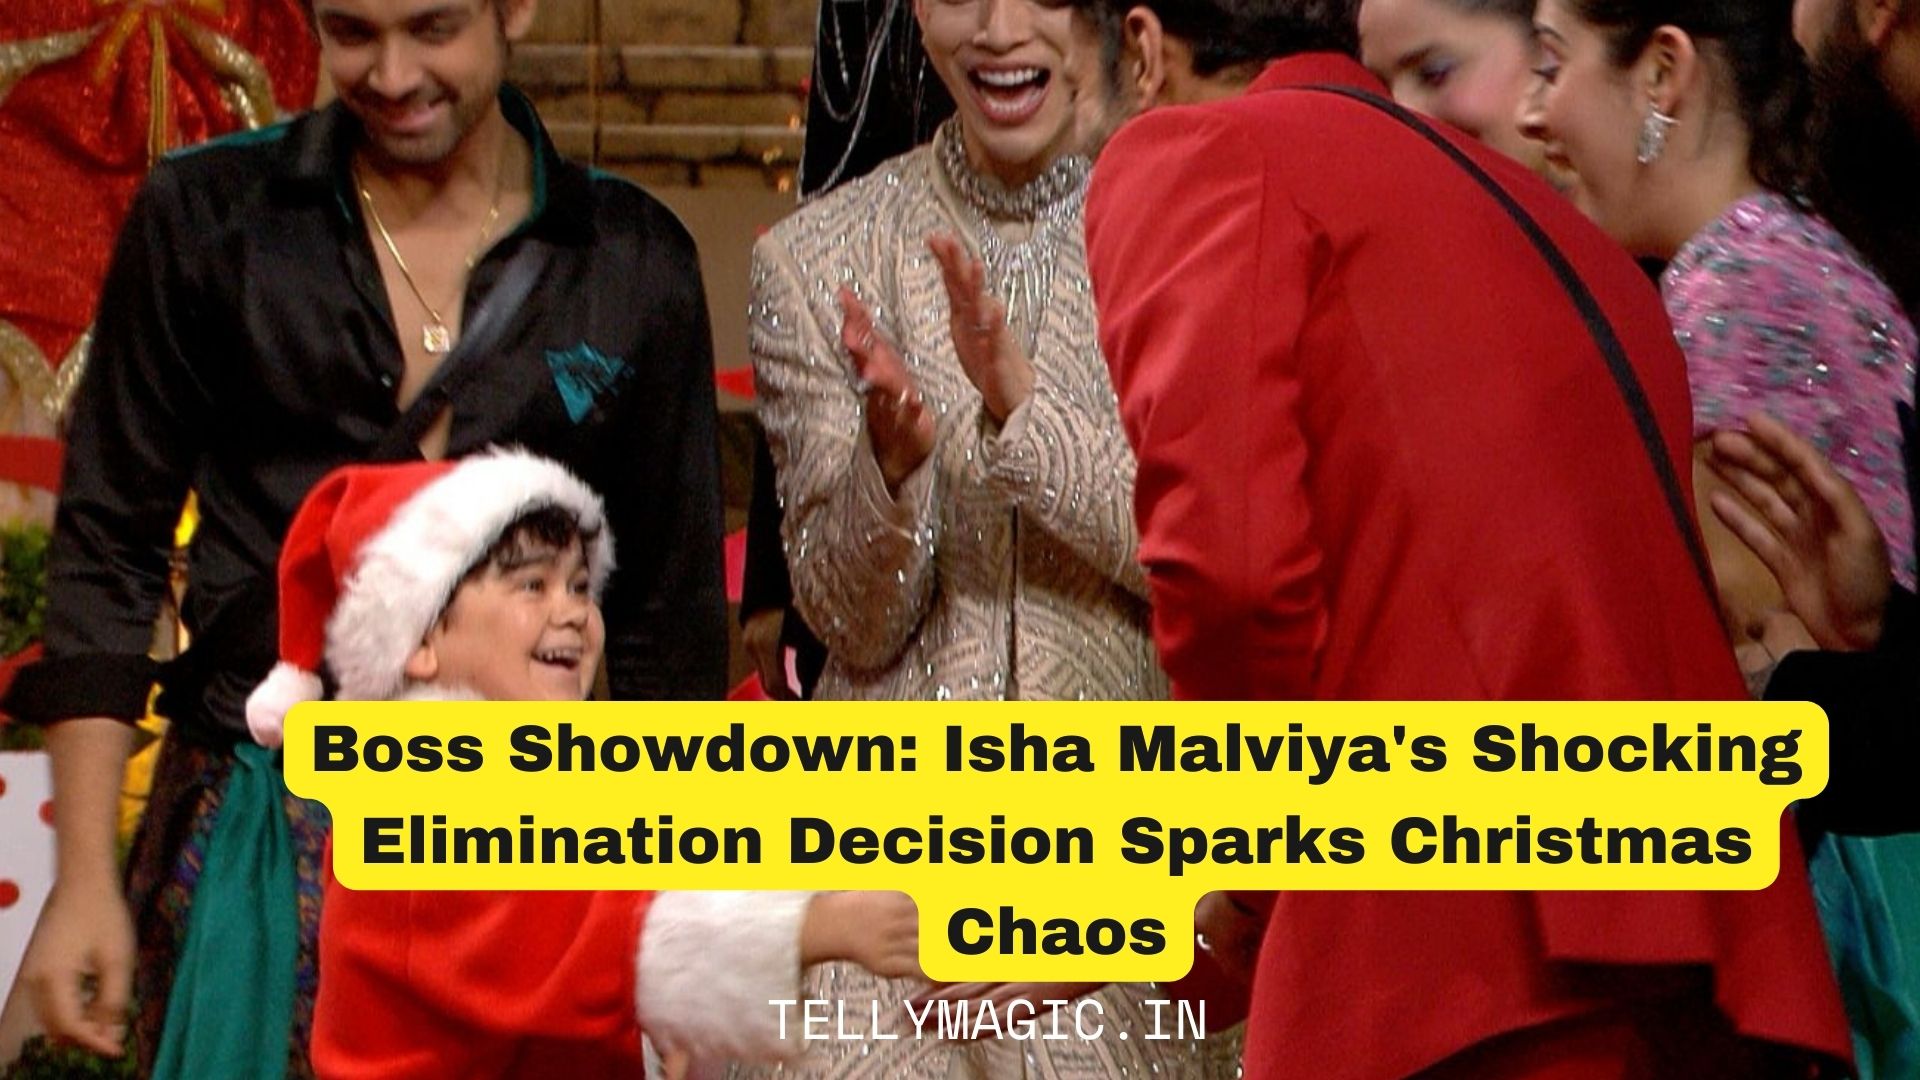 Boss Showdown: Isha Malviya’s Shocking Elimination Decision Sparks Christmas Chaos